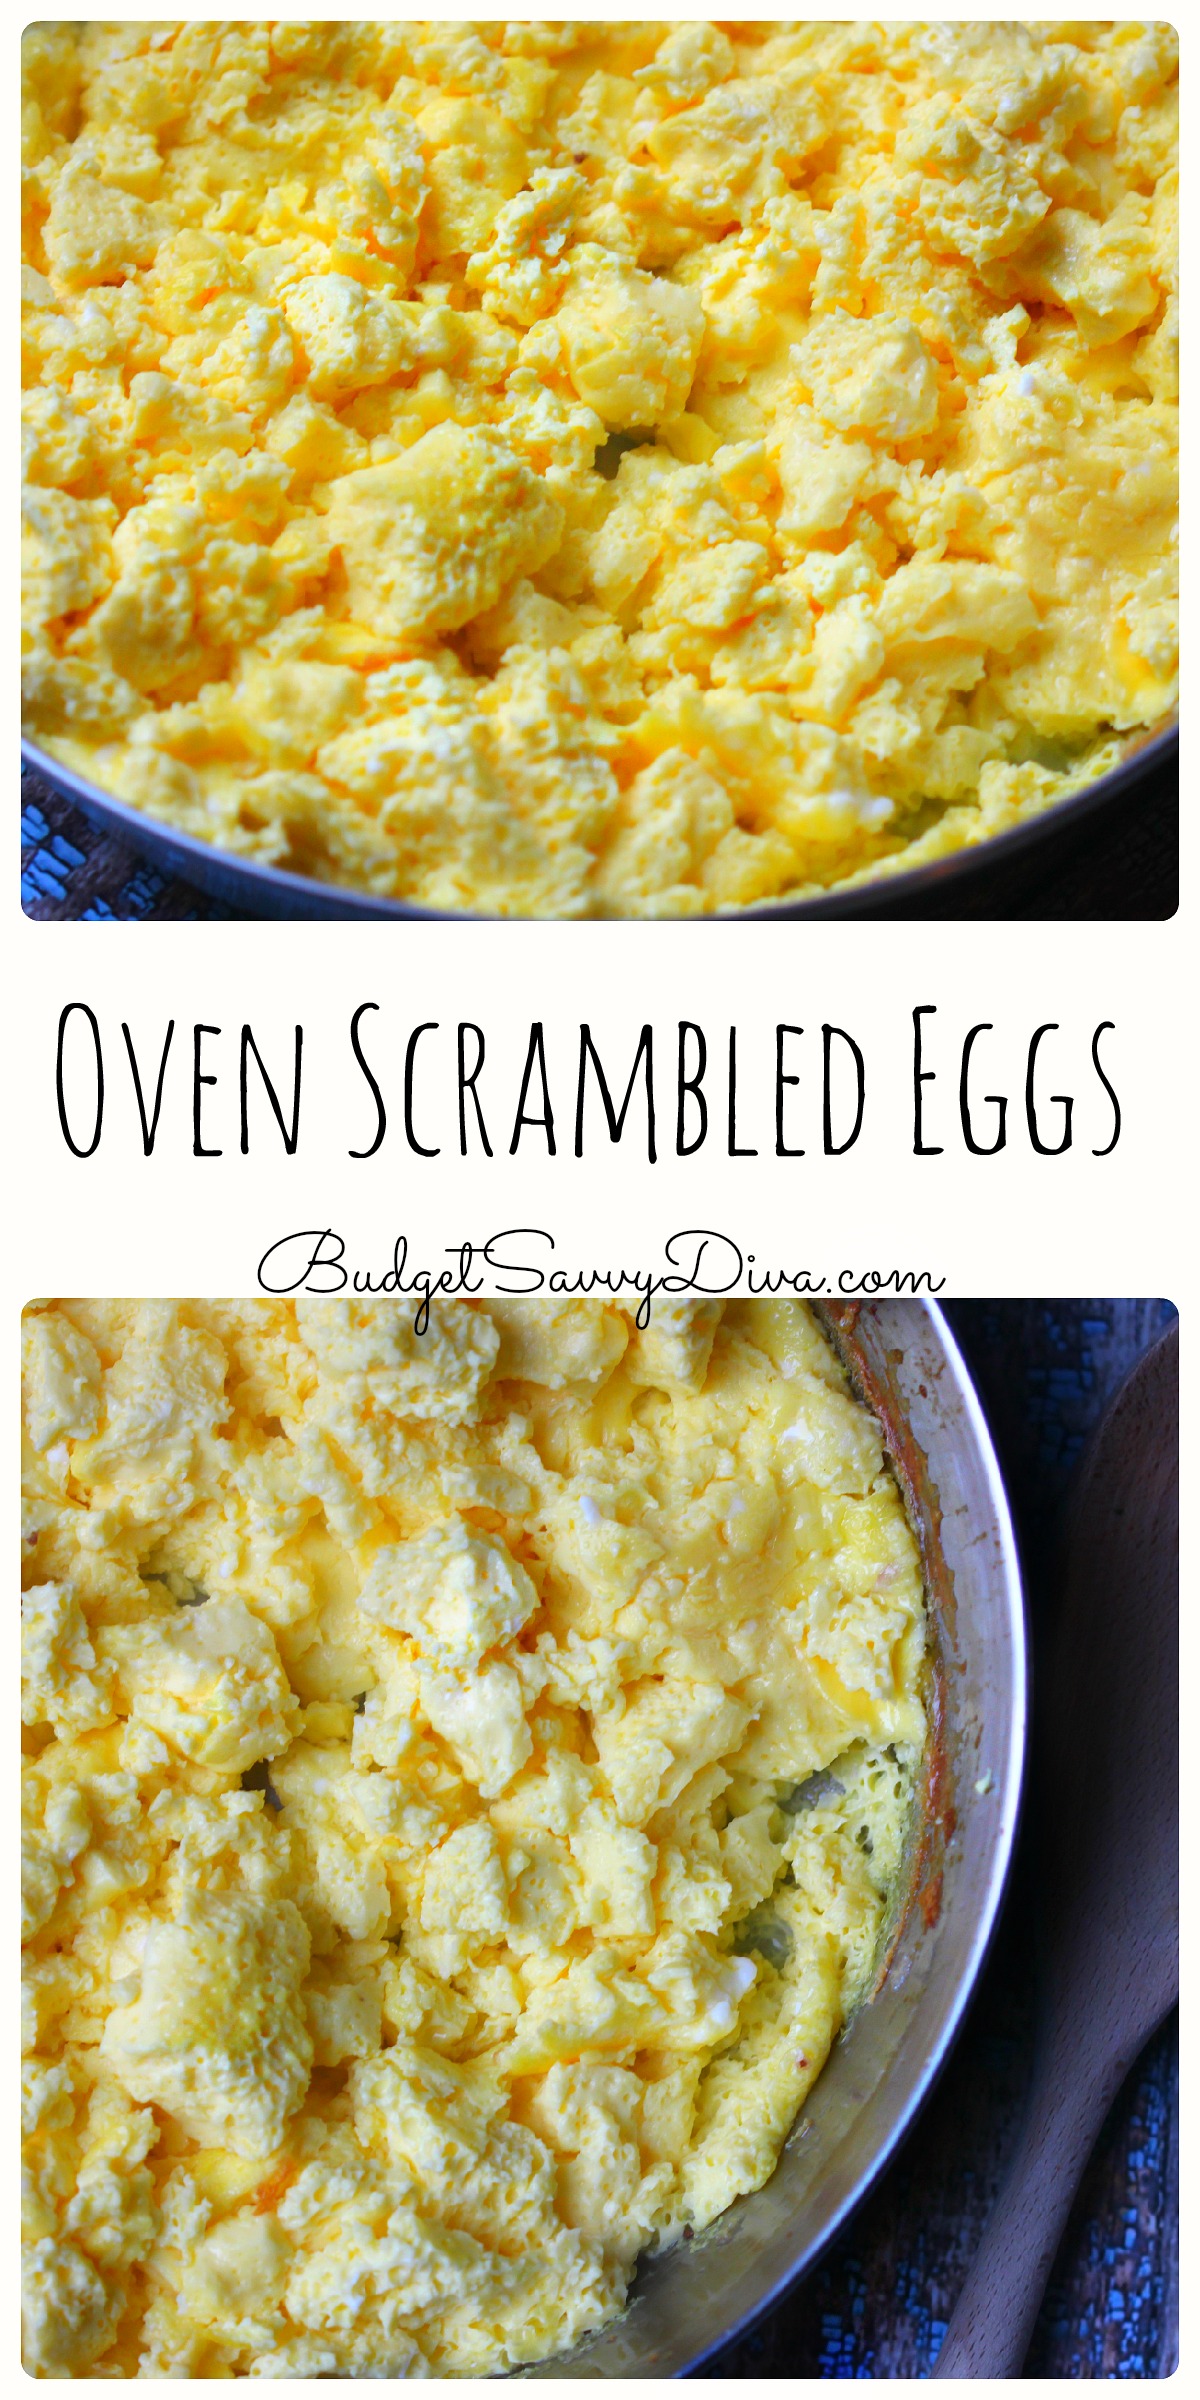 Oven Scrambled Eggs Recipe - Budget Savvy Diva